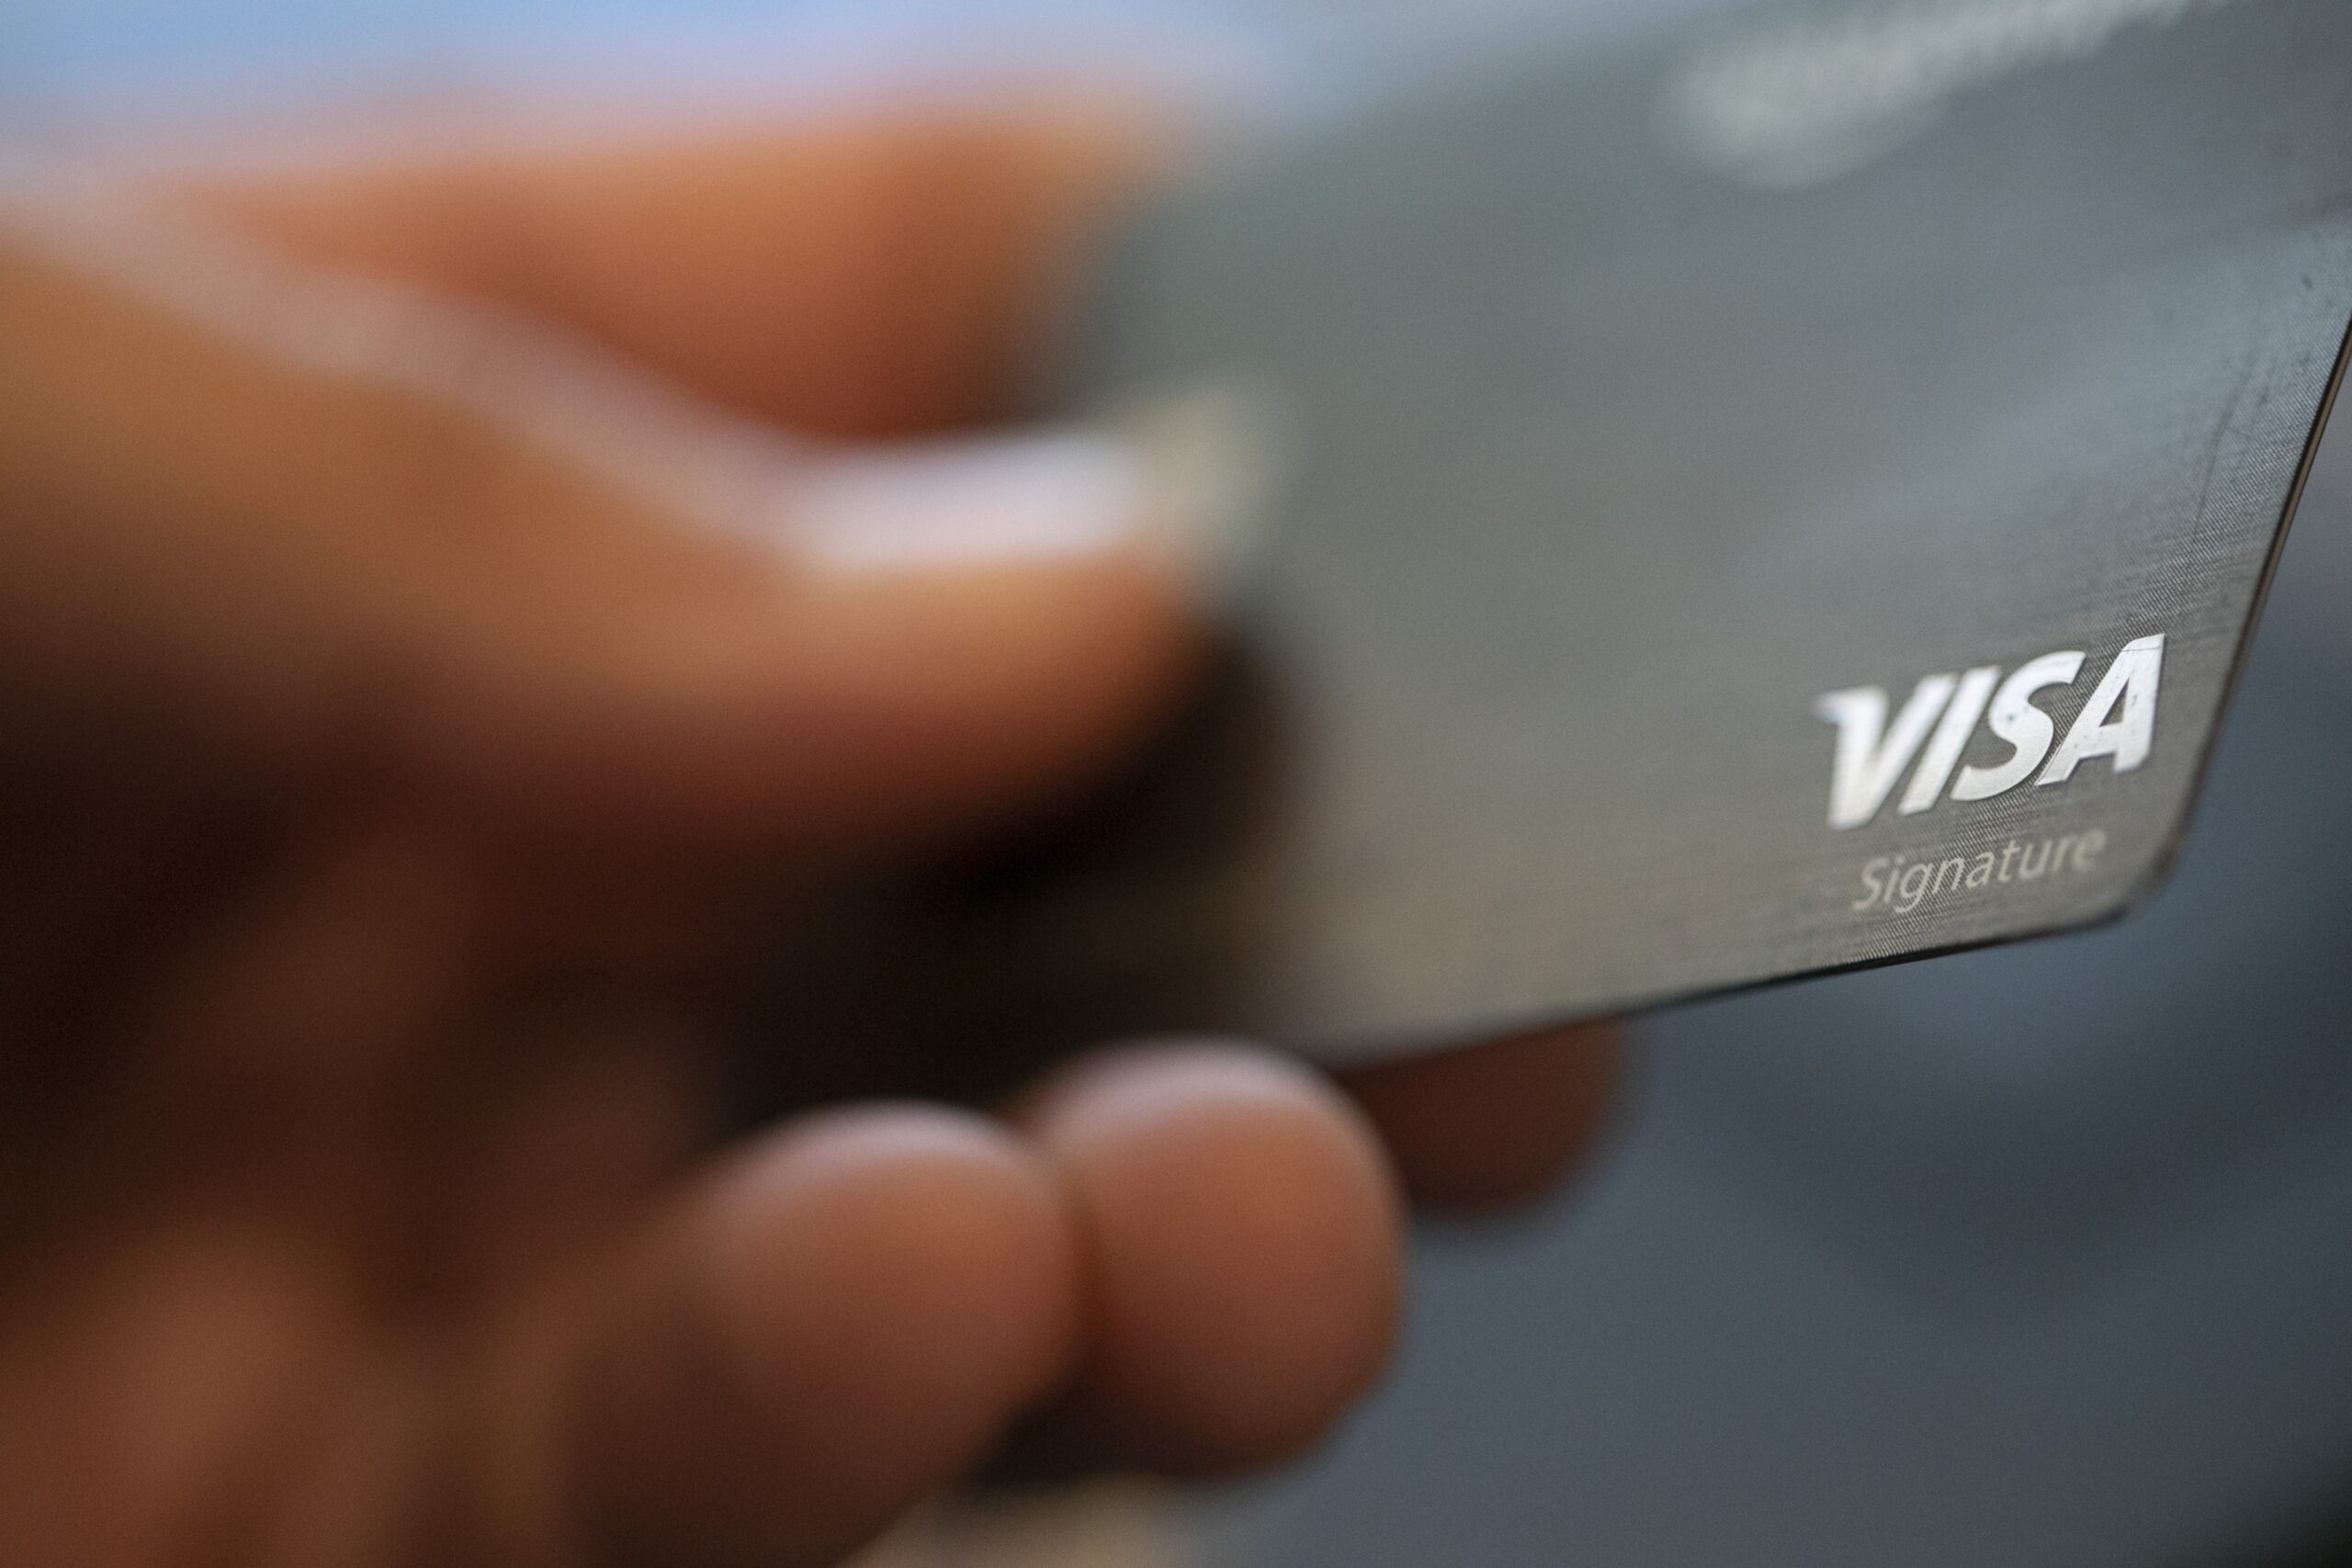 Visa logo on a credit card